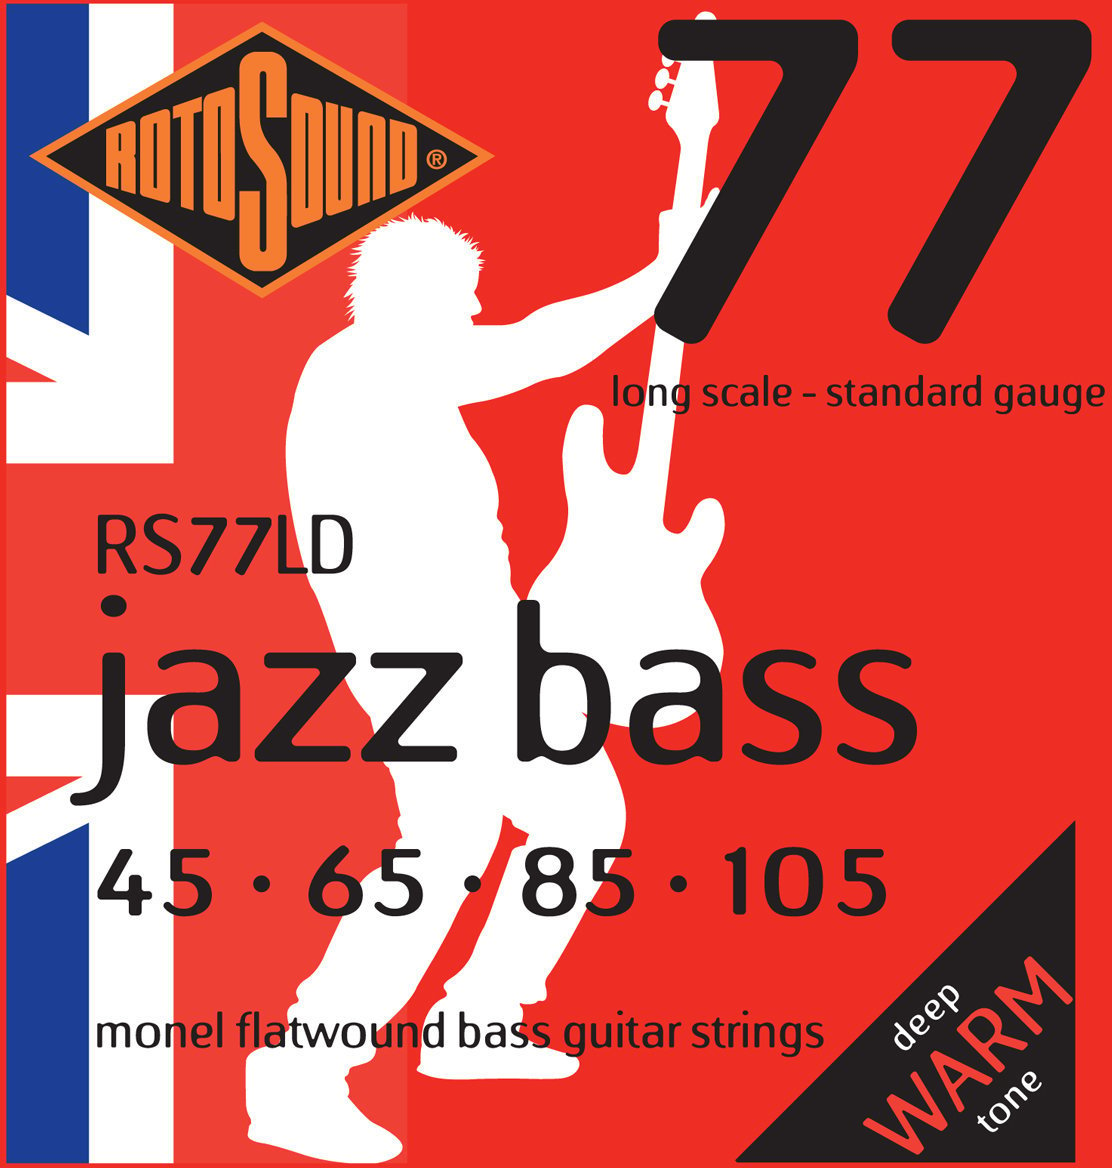 Struny do gitary basowej Rotosound RS 77 LD